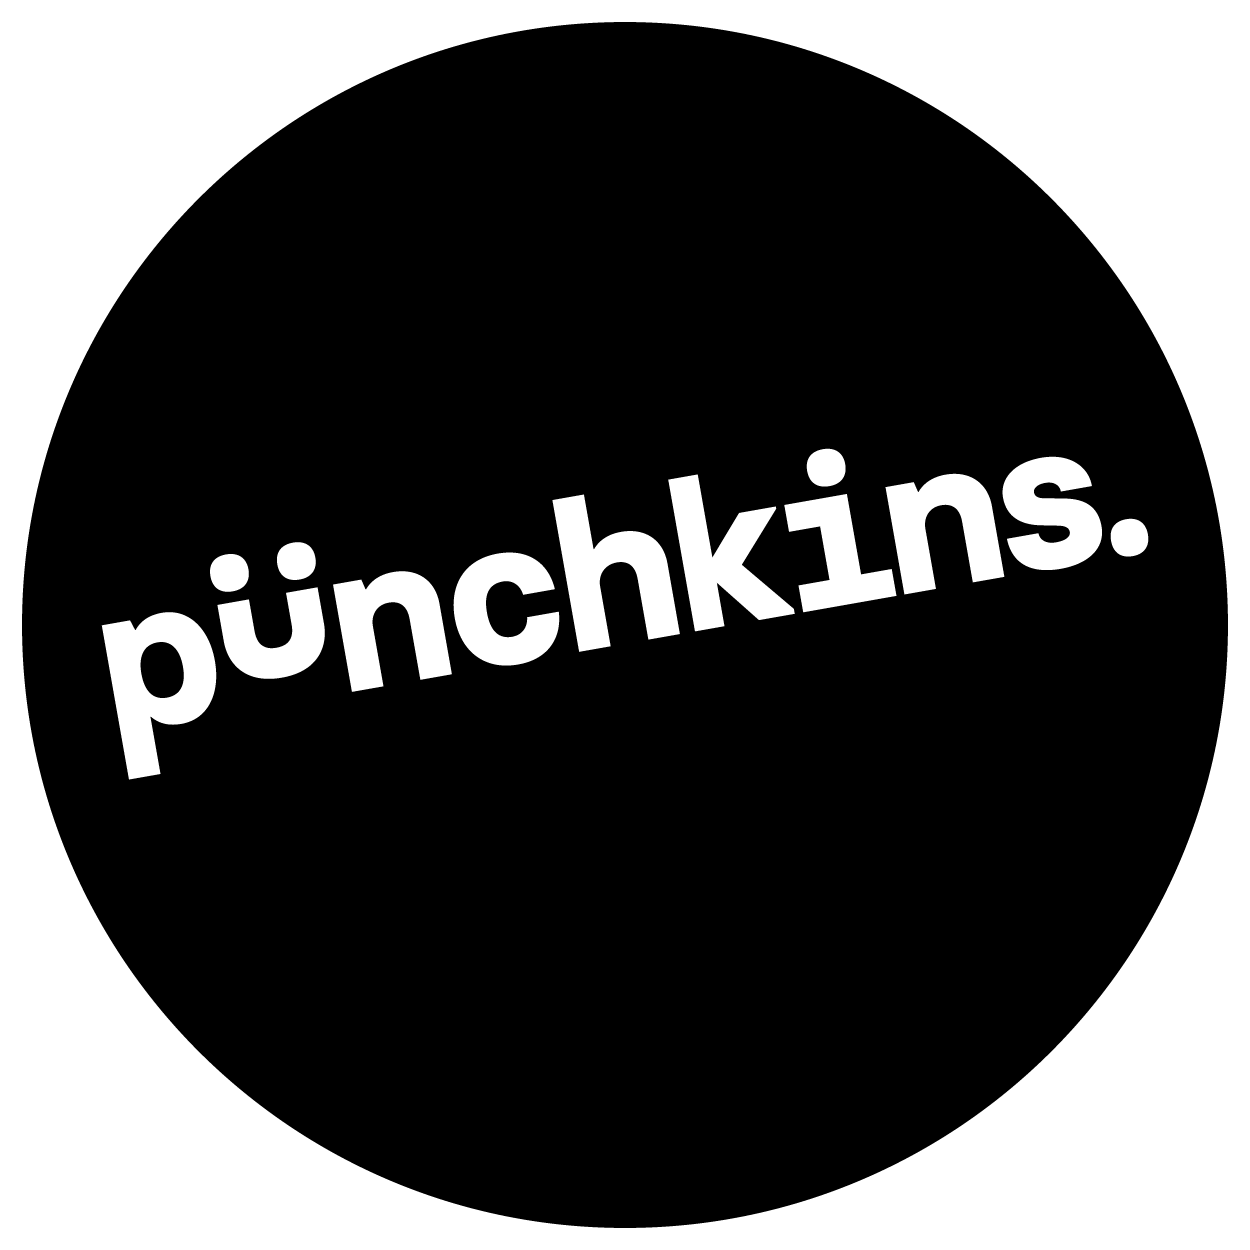 punchkins logo